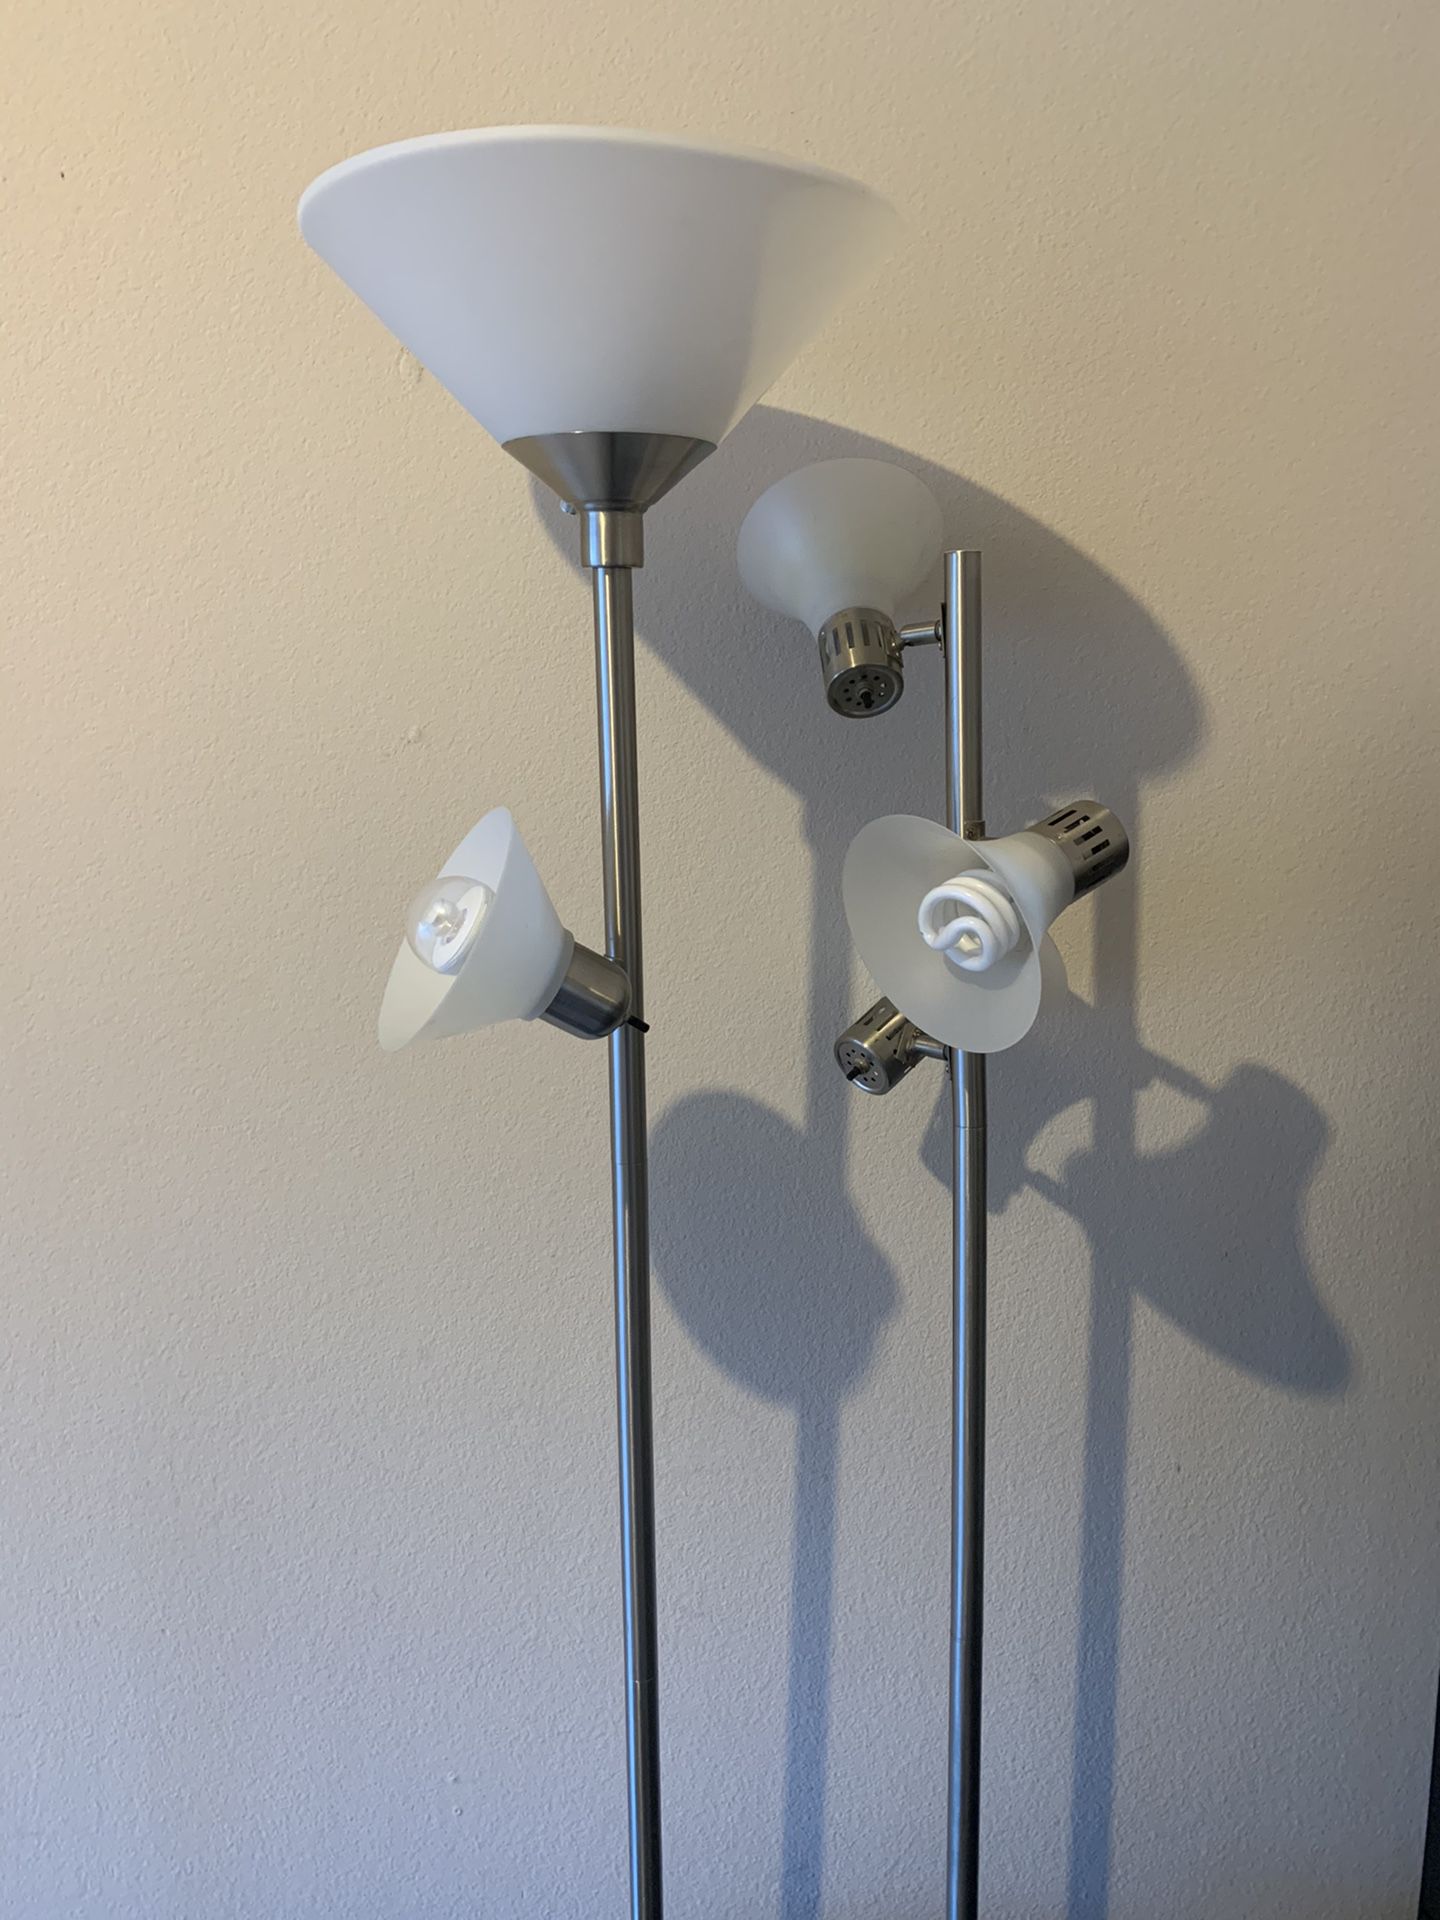 Basic floor lamps